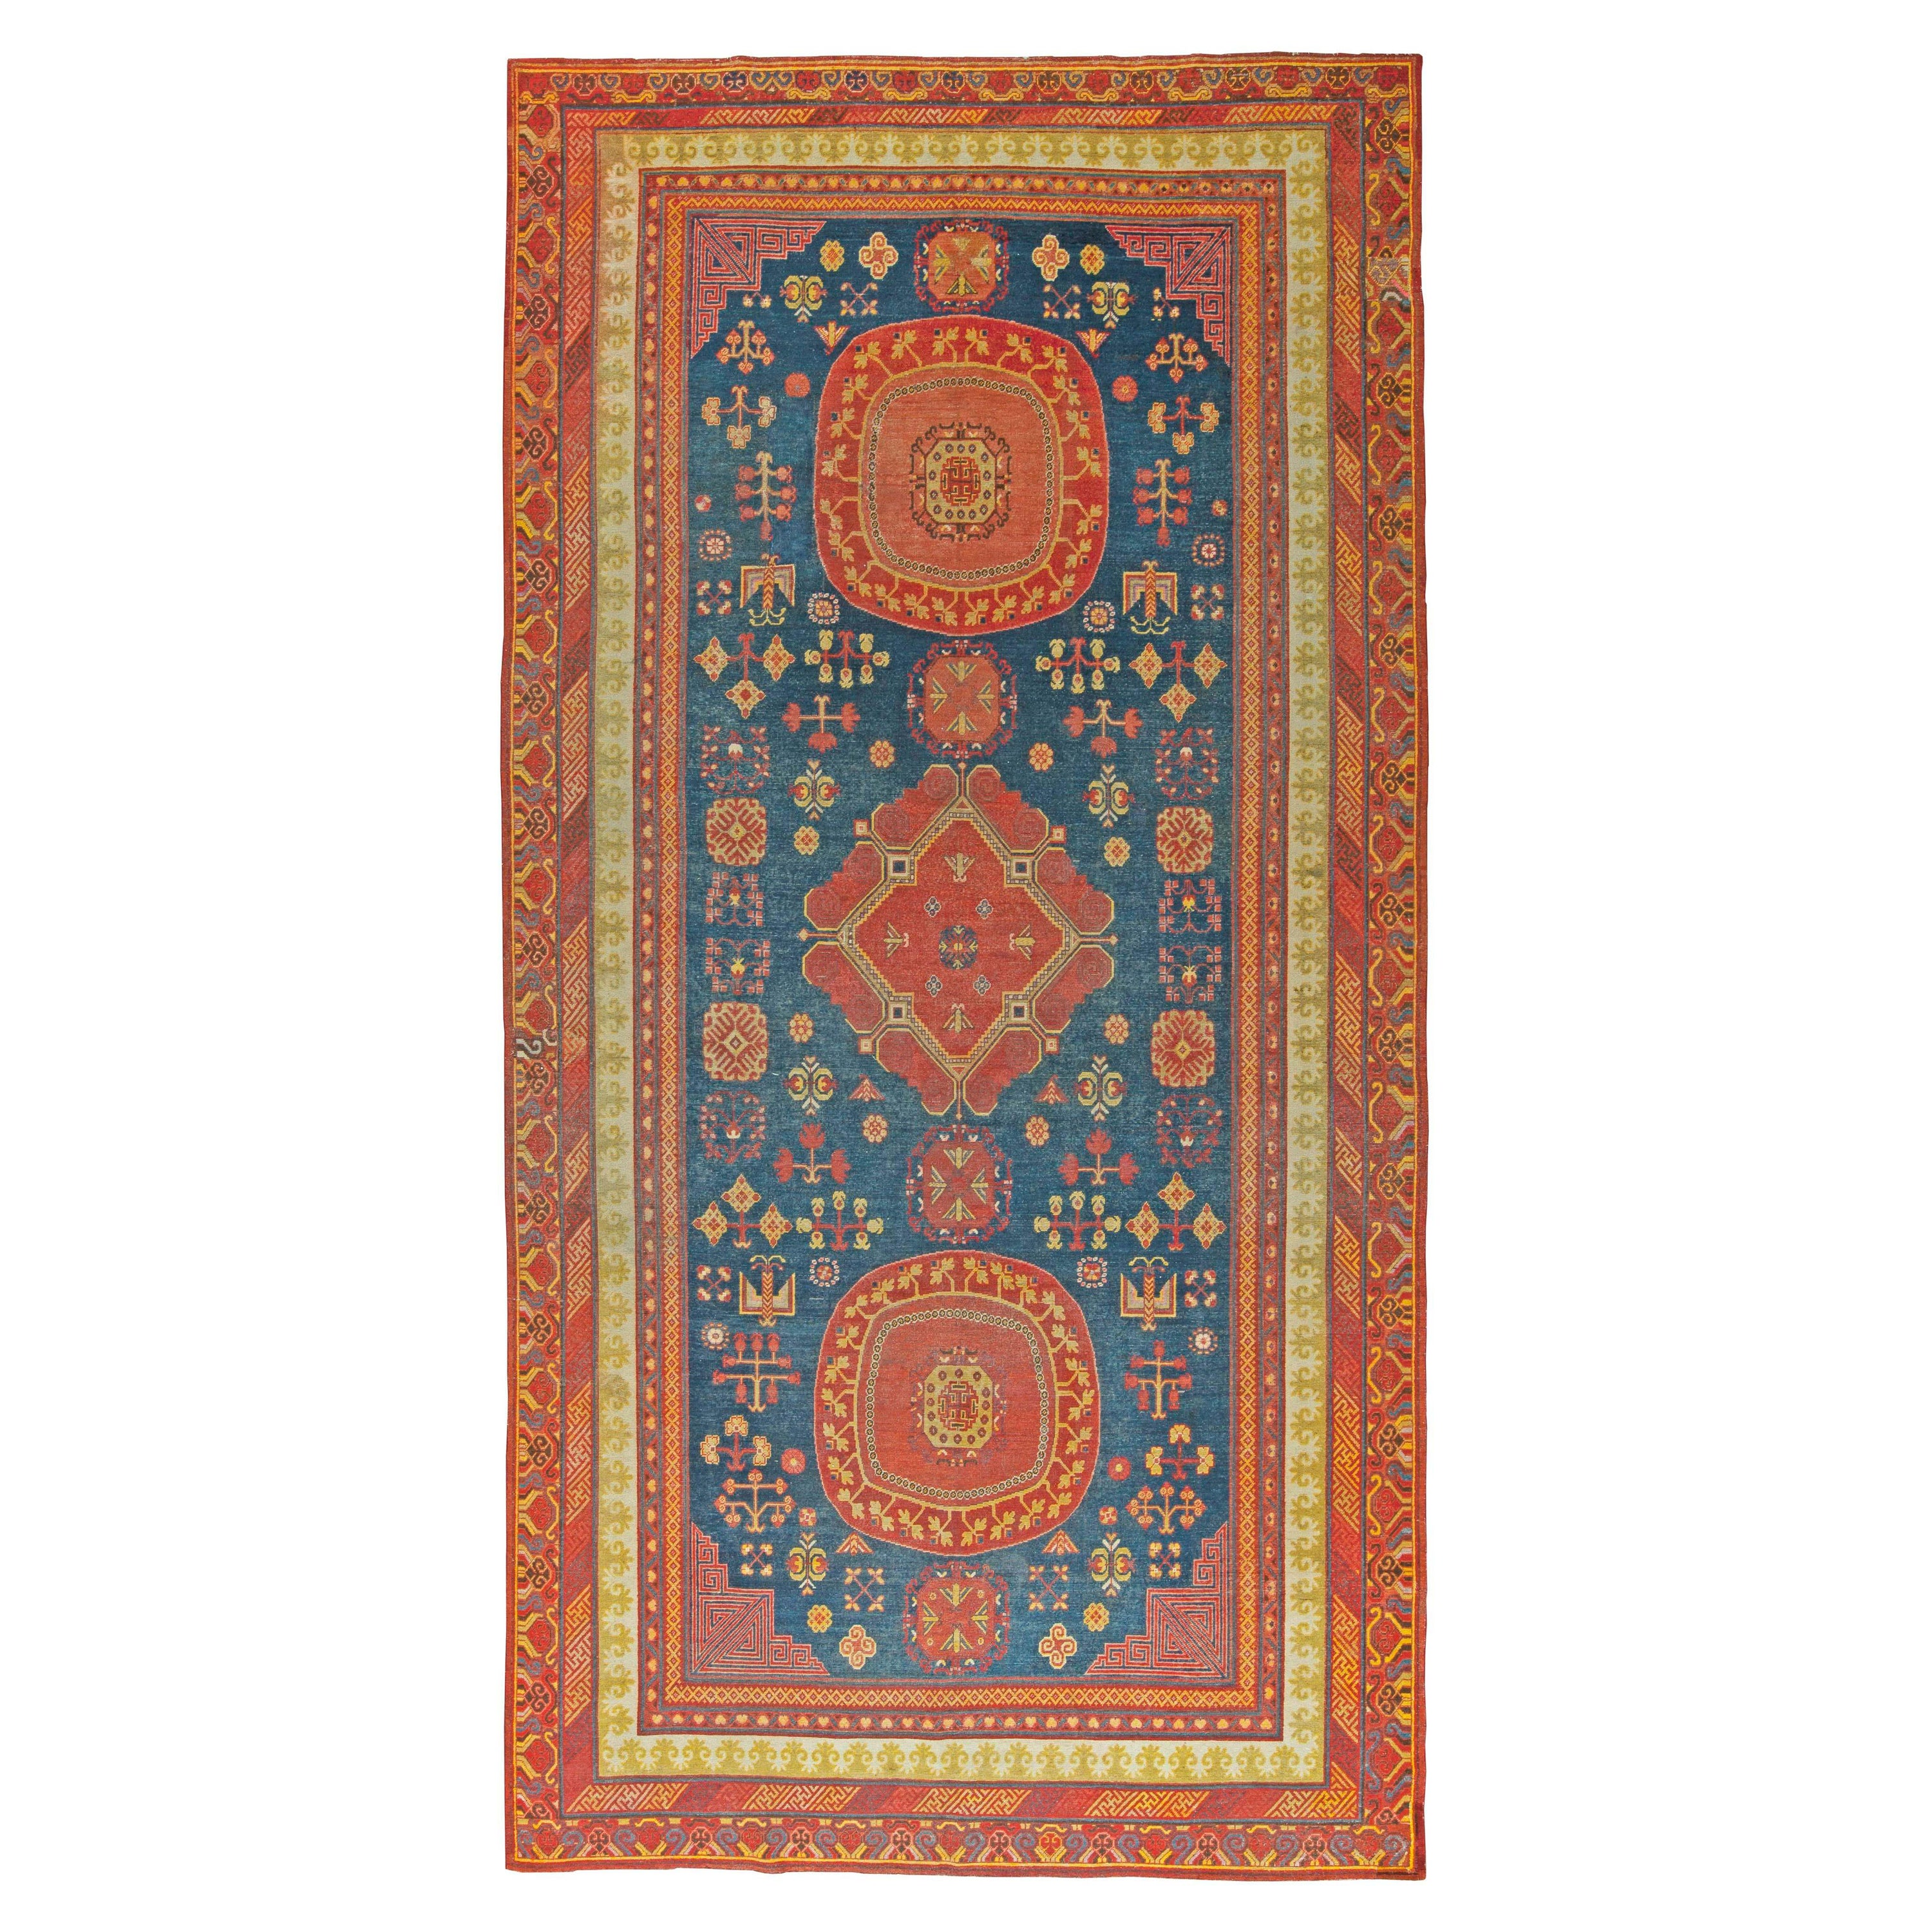 19th Century Samarkand Red and Blue Handmade Rug